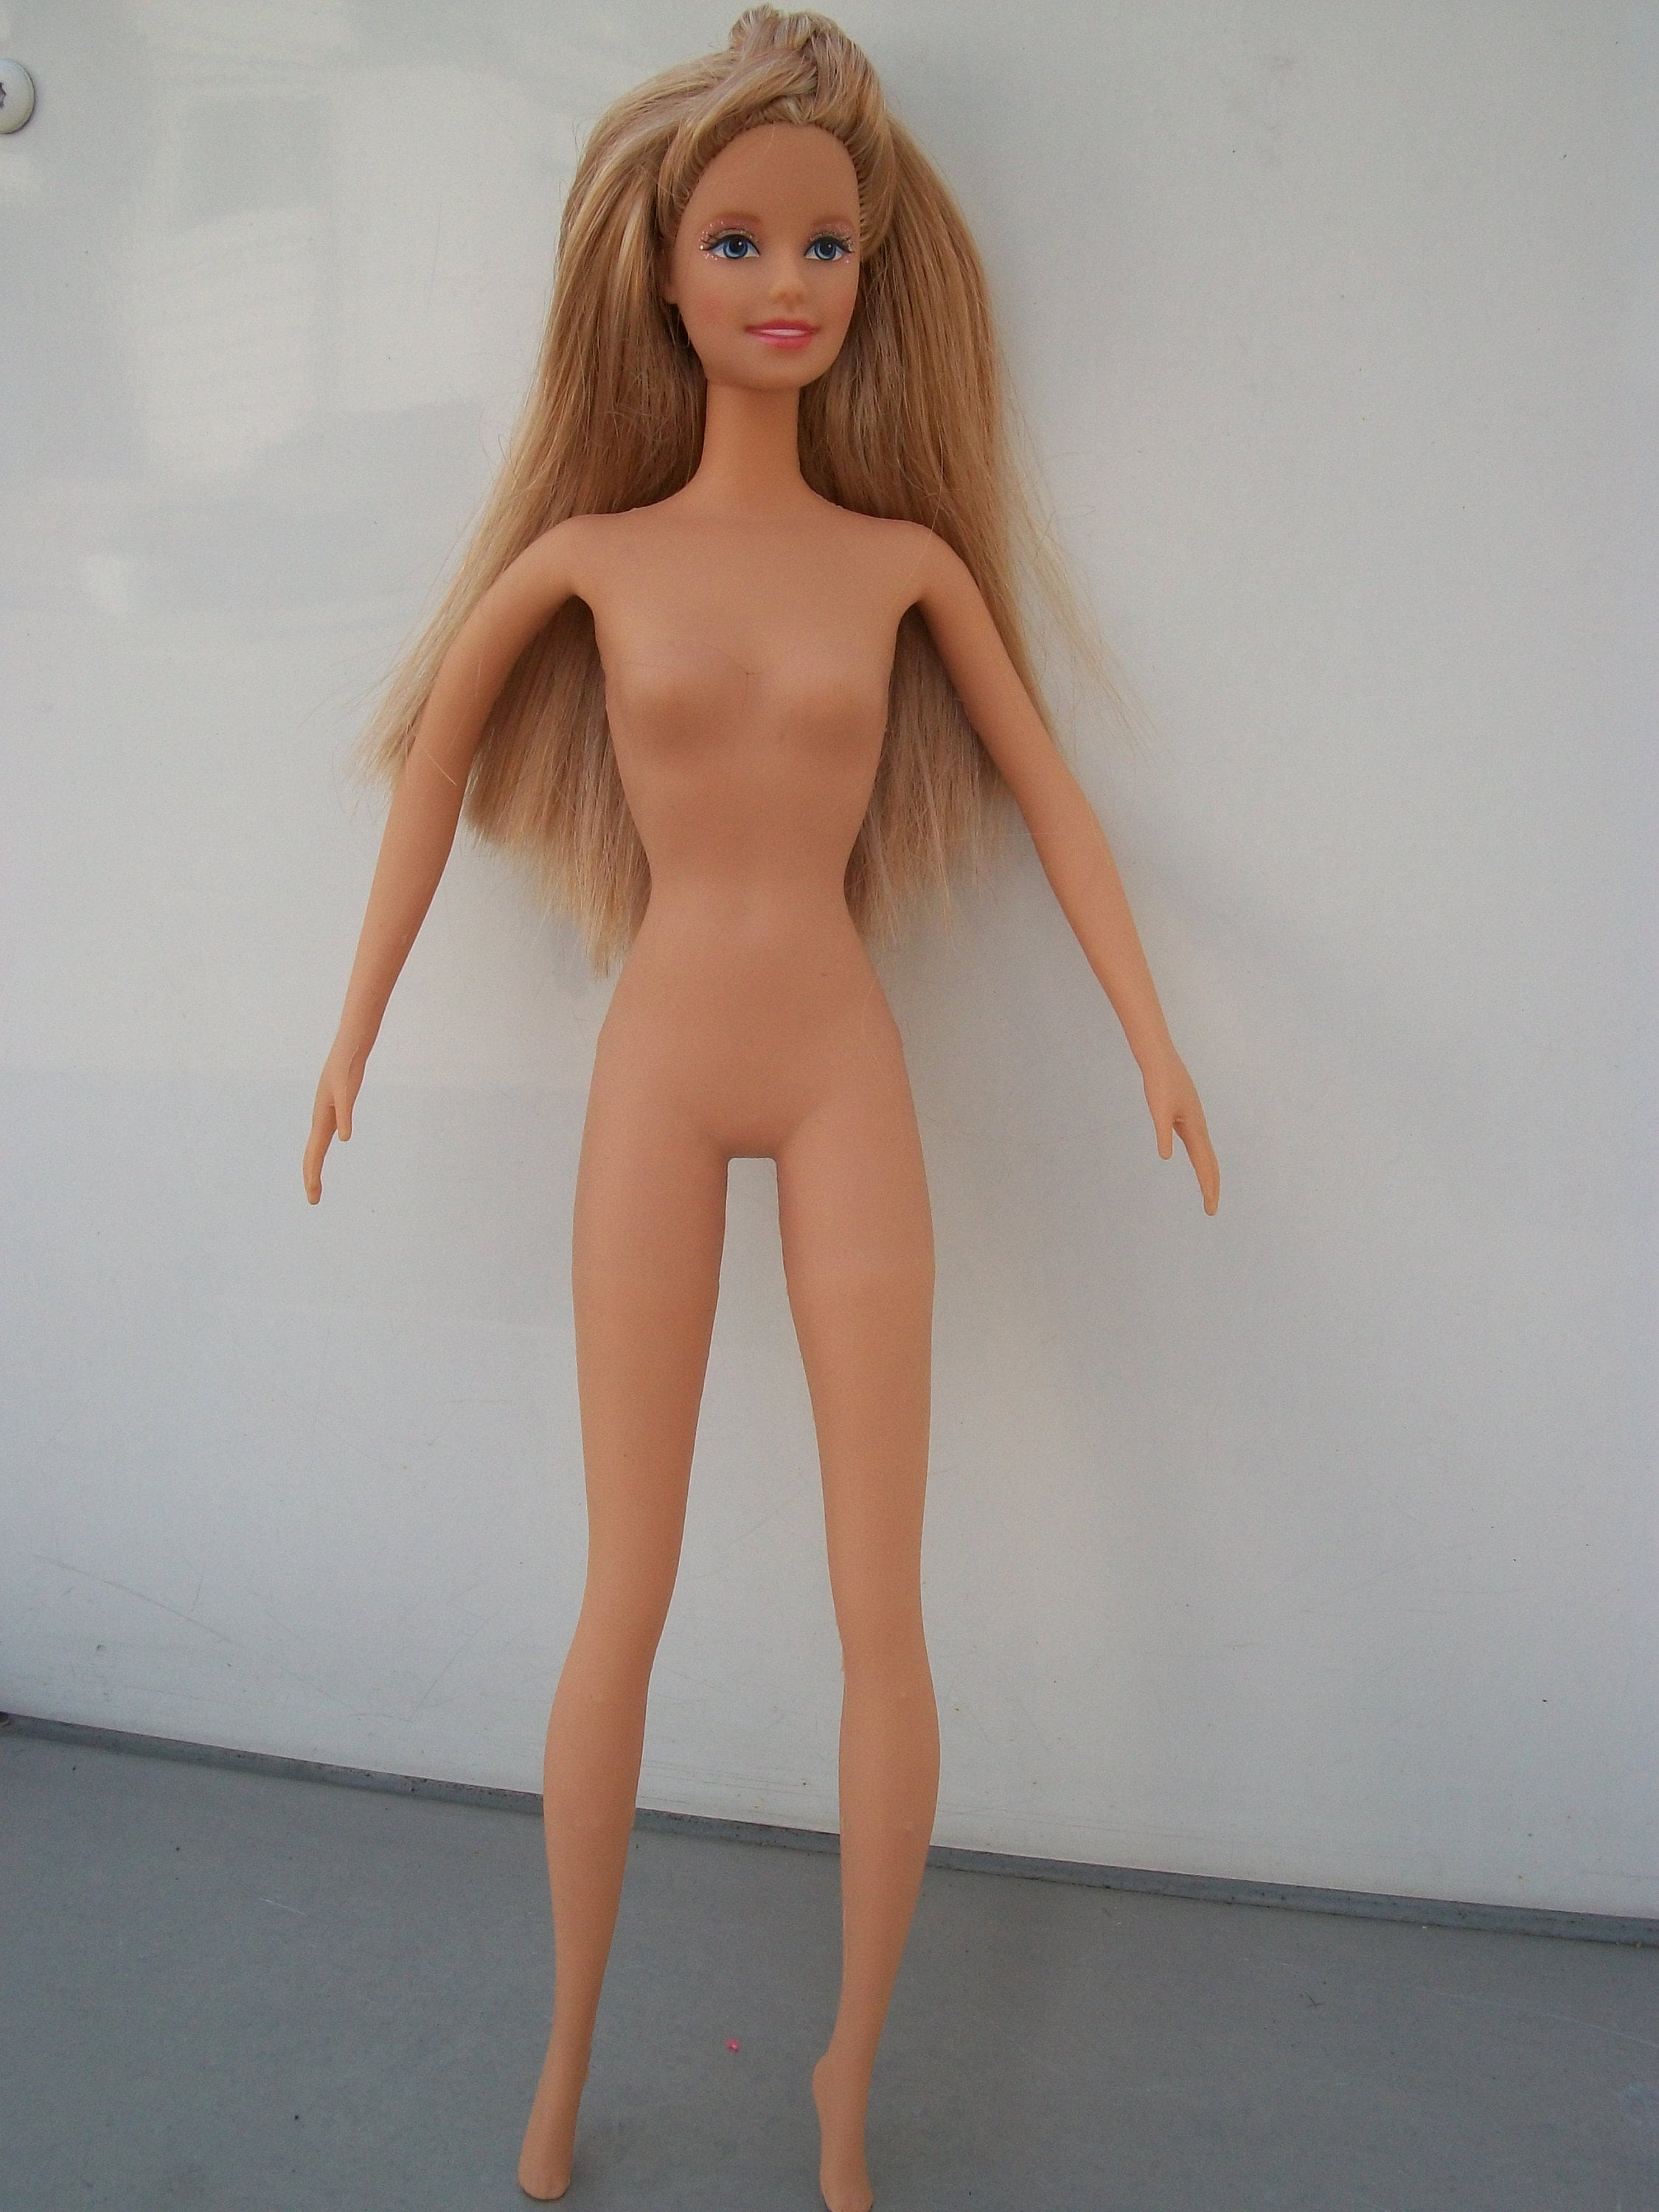 Nichelle Doll, Shani Doll, Black Barbie Doll, 1990-91 Nude to